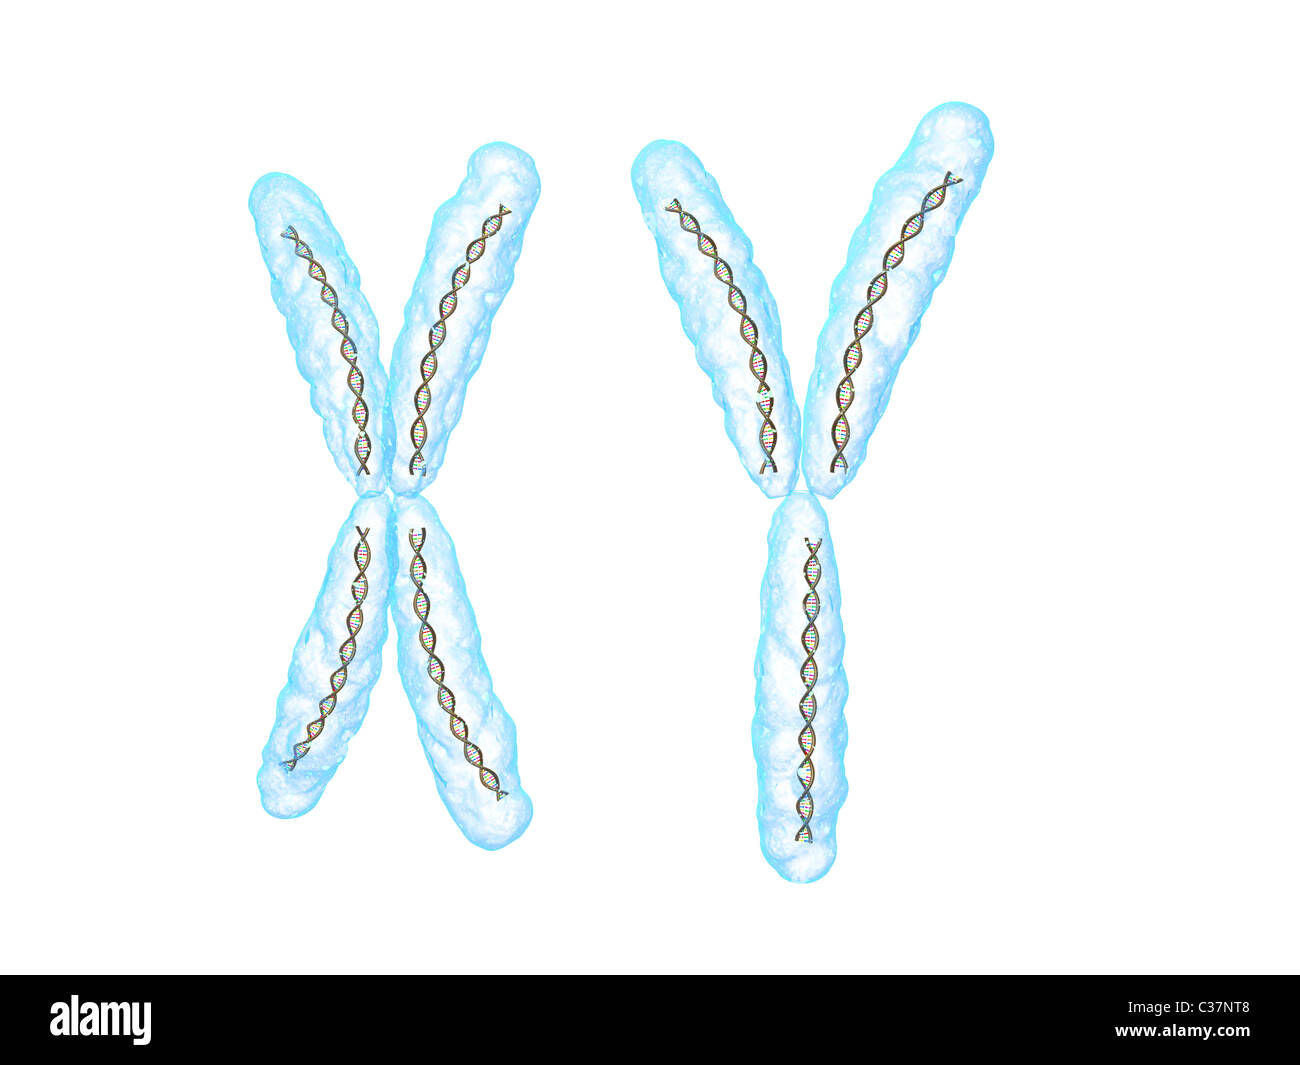 x - chromosome, y - chromosome Stock Photo